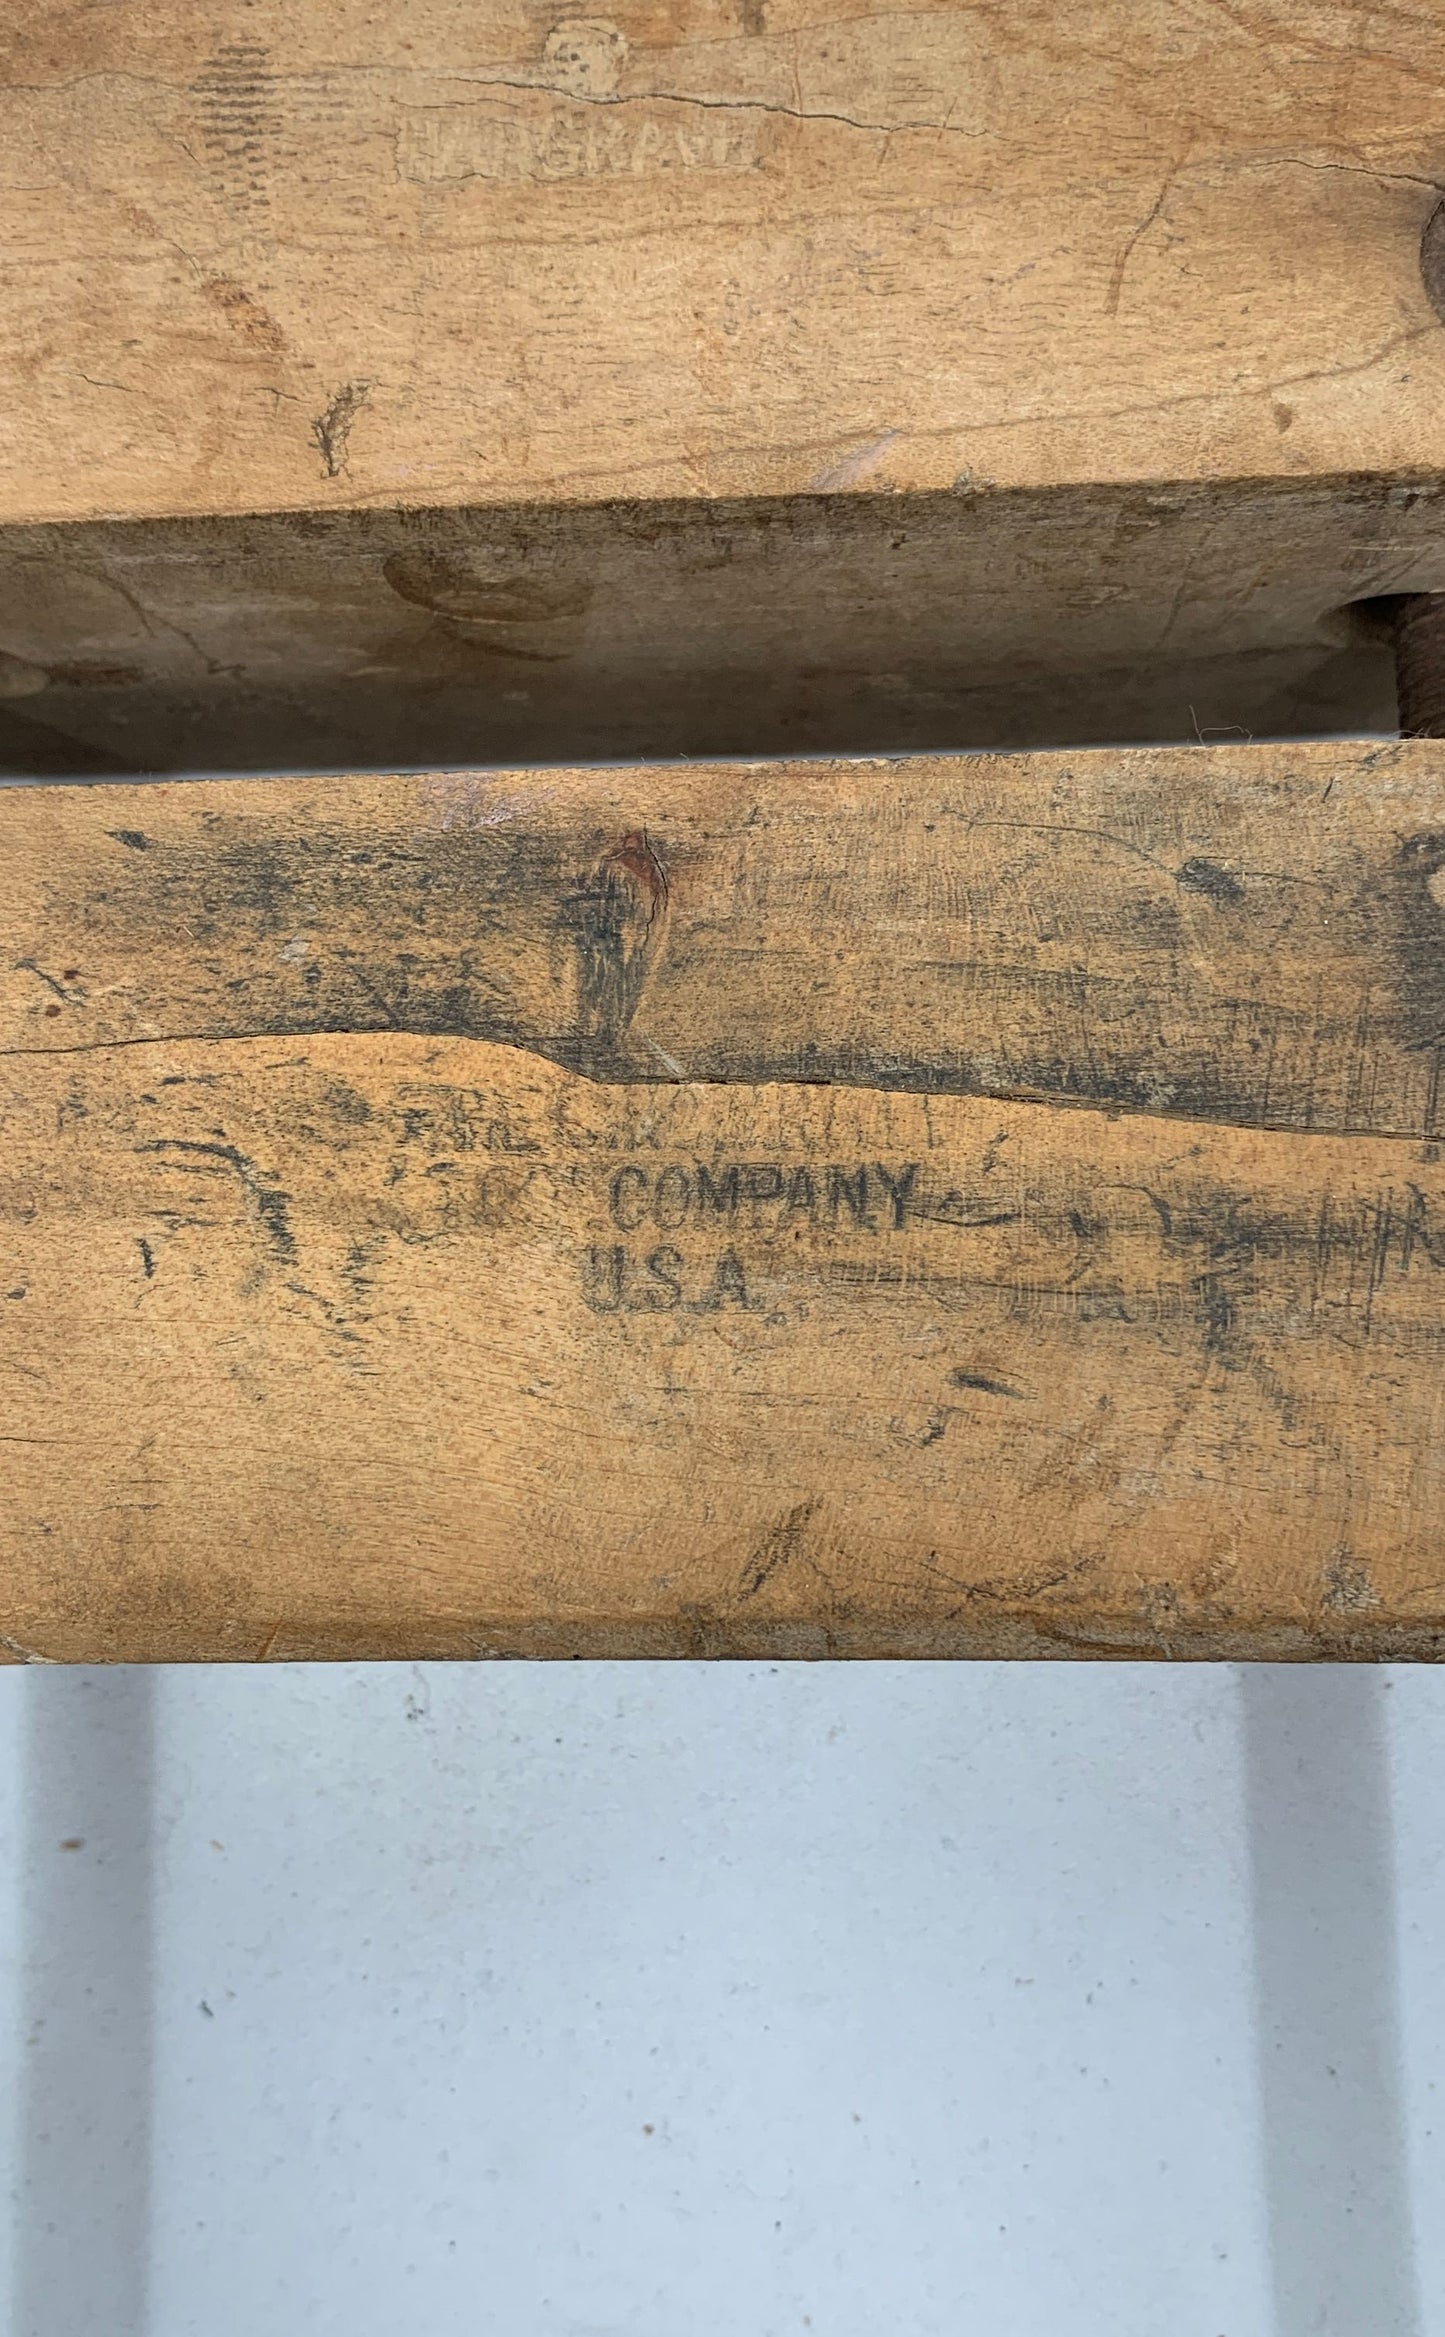 The Cincinnati Tool Company Antique Hargrave Wooden Clamp